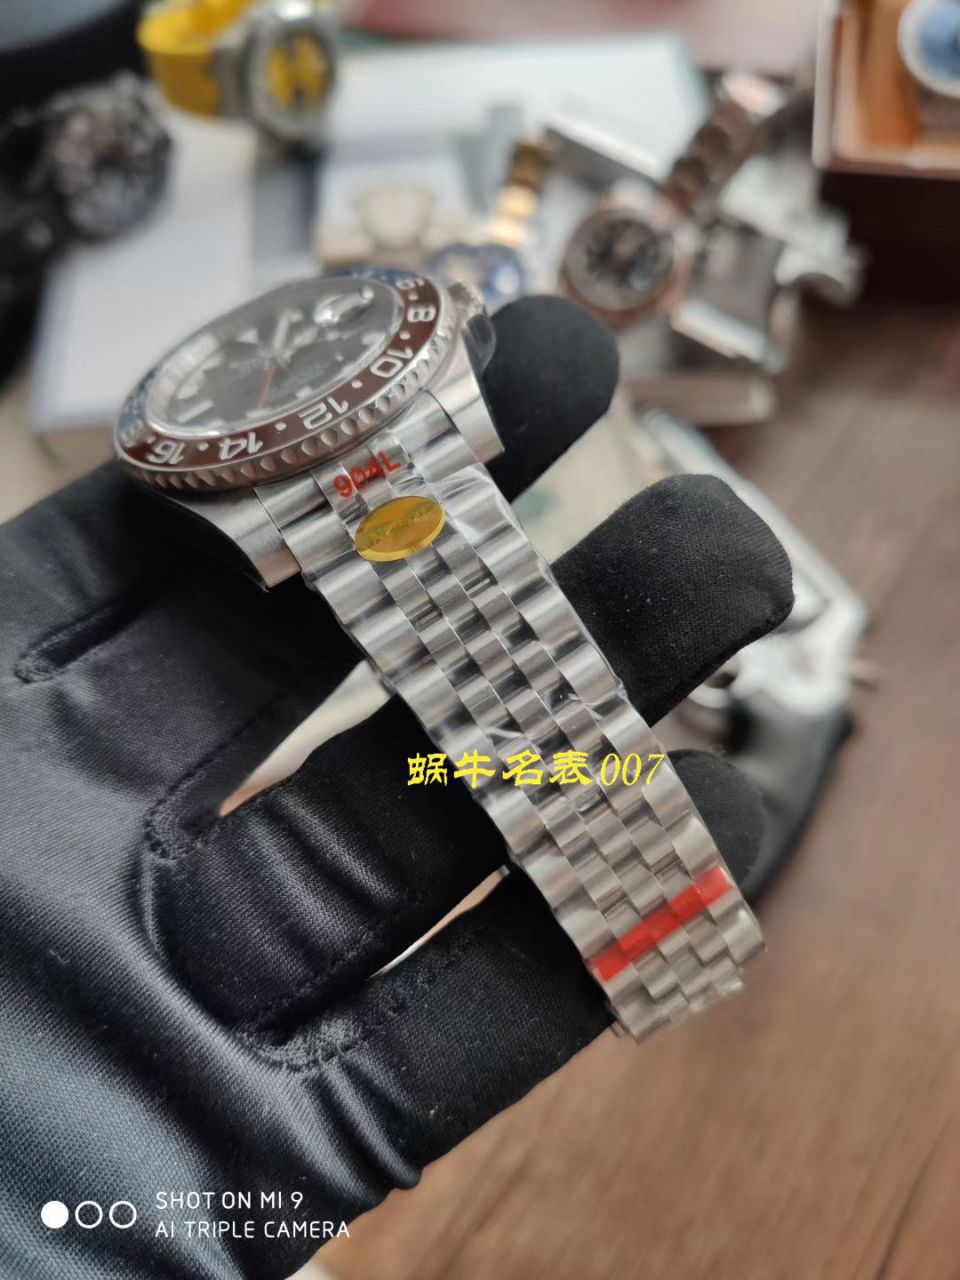 【NOOB厂Rolex顶级复刻手表】劳力士格林尼治型II系列126710BLRO-0001腕表 / R378